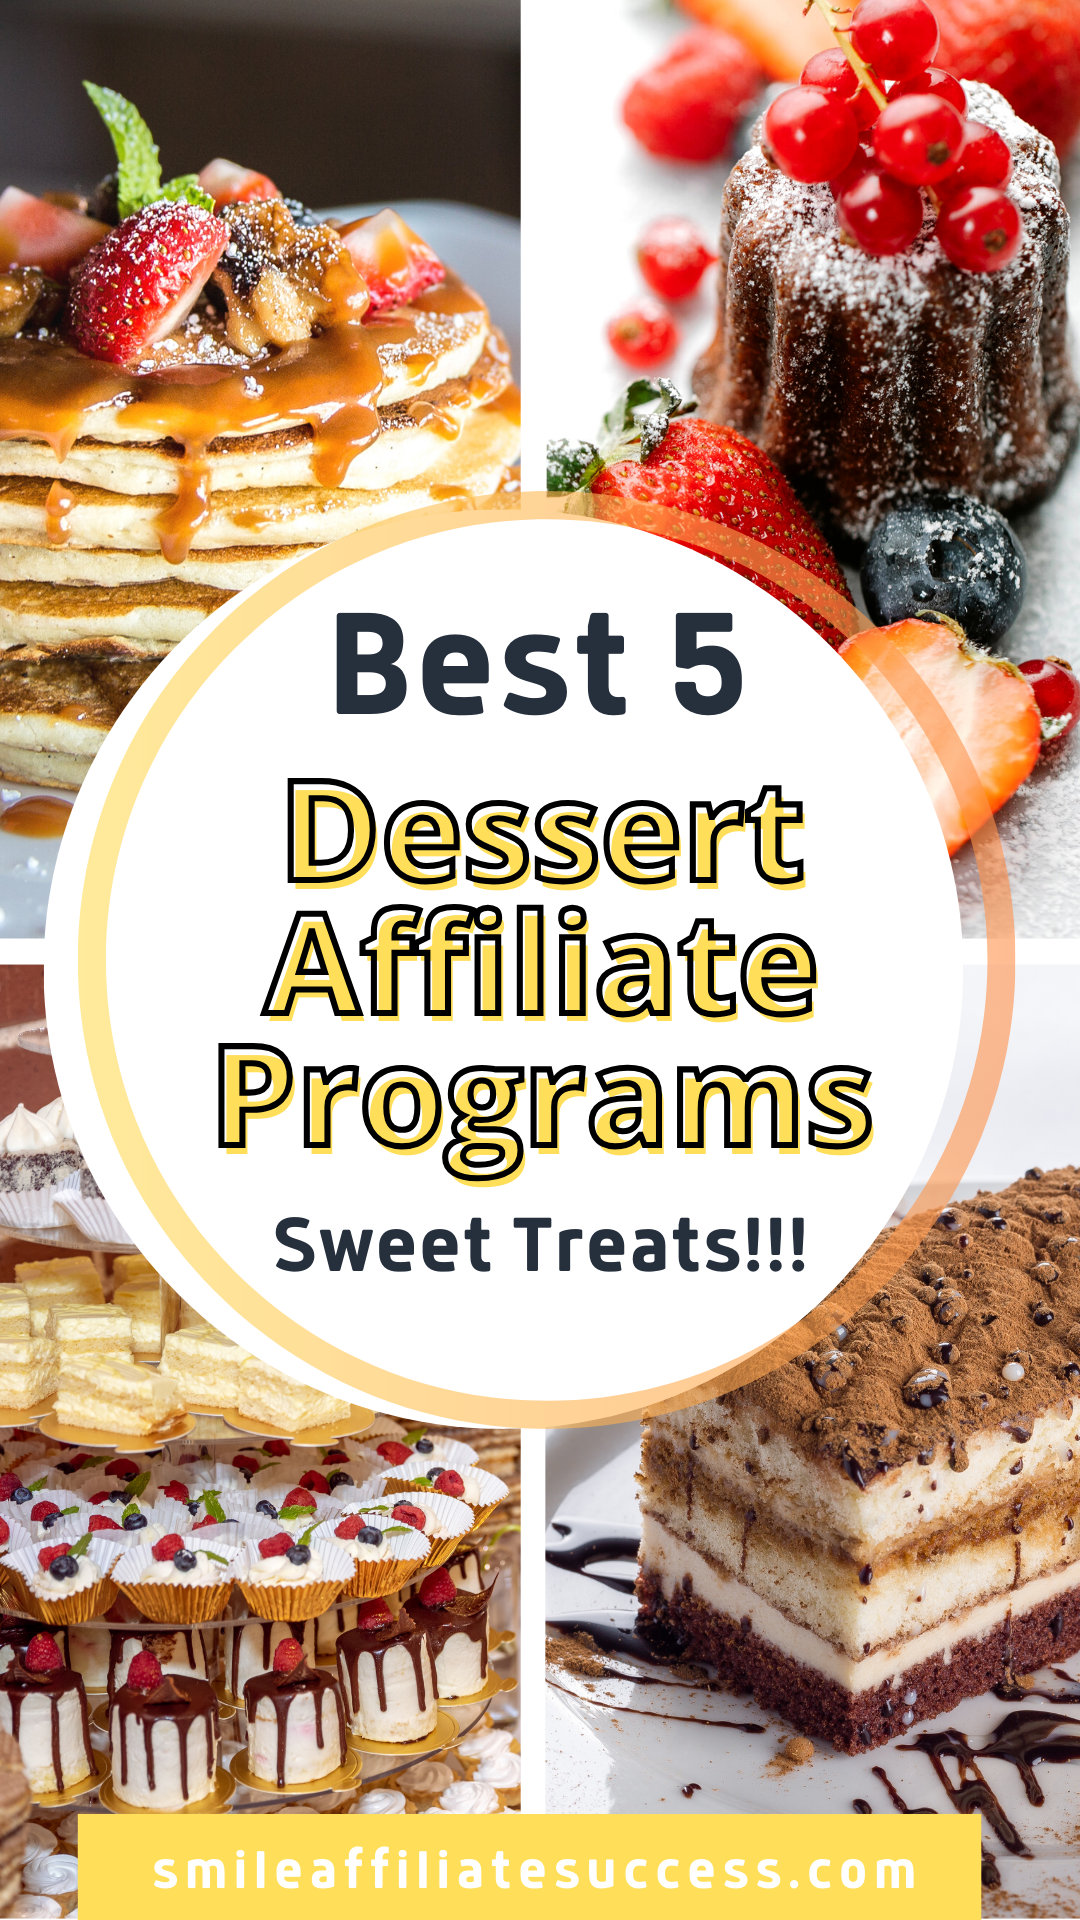 Best 5 Dessert Affiliate Programs